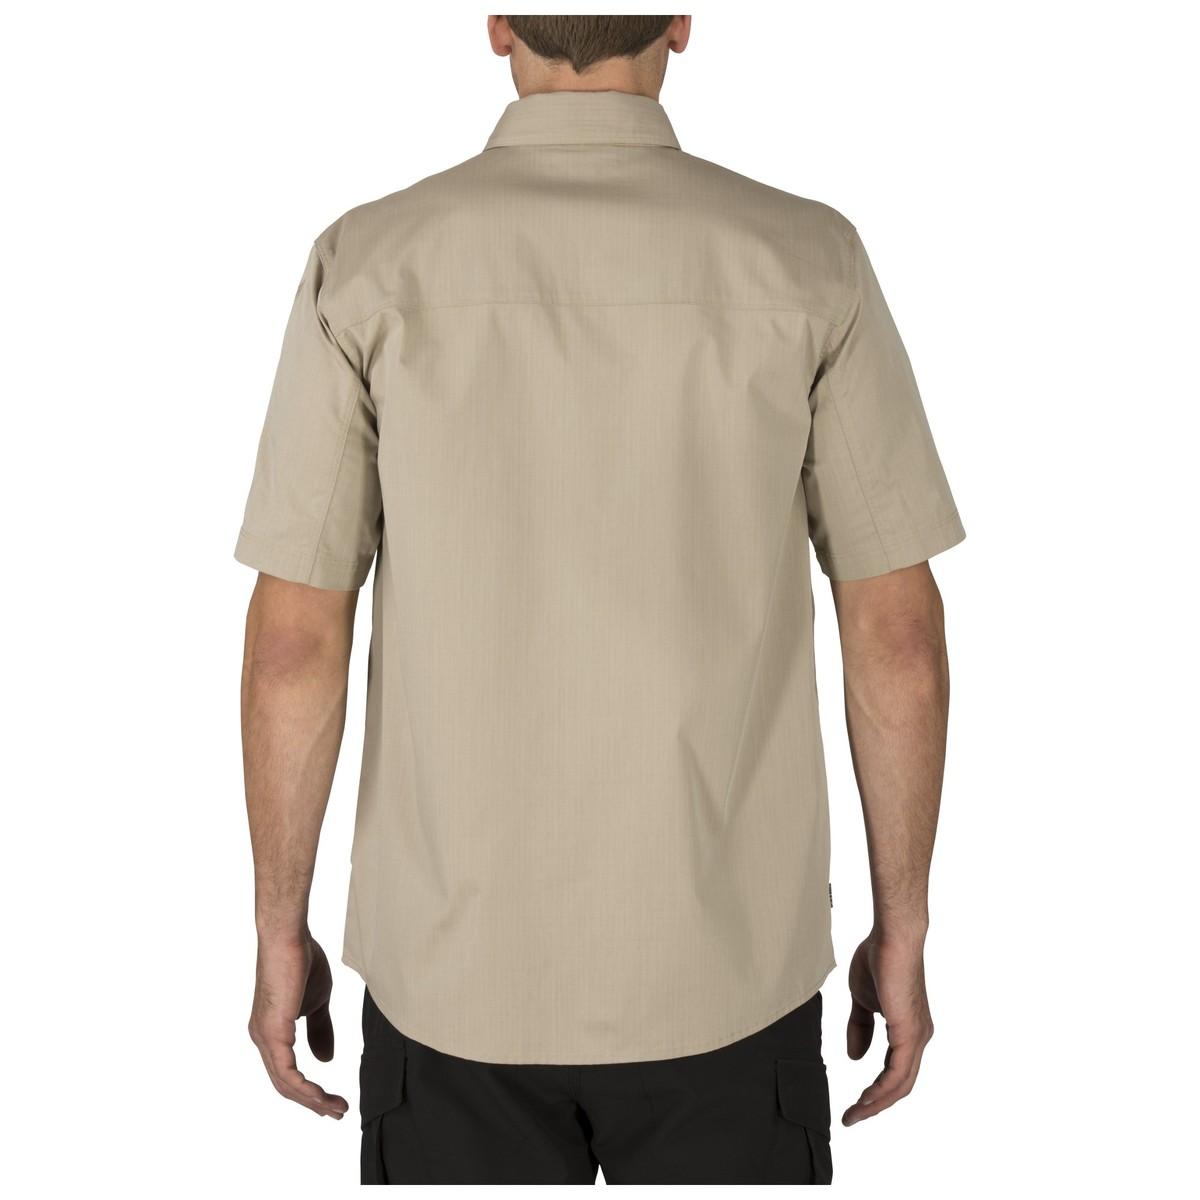 Tactical Uniform for Military, Law Enforcement | Buy 5.11 Stryke Pant  Online | Pro K9 Supplies